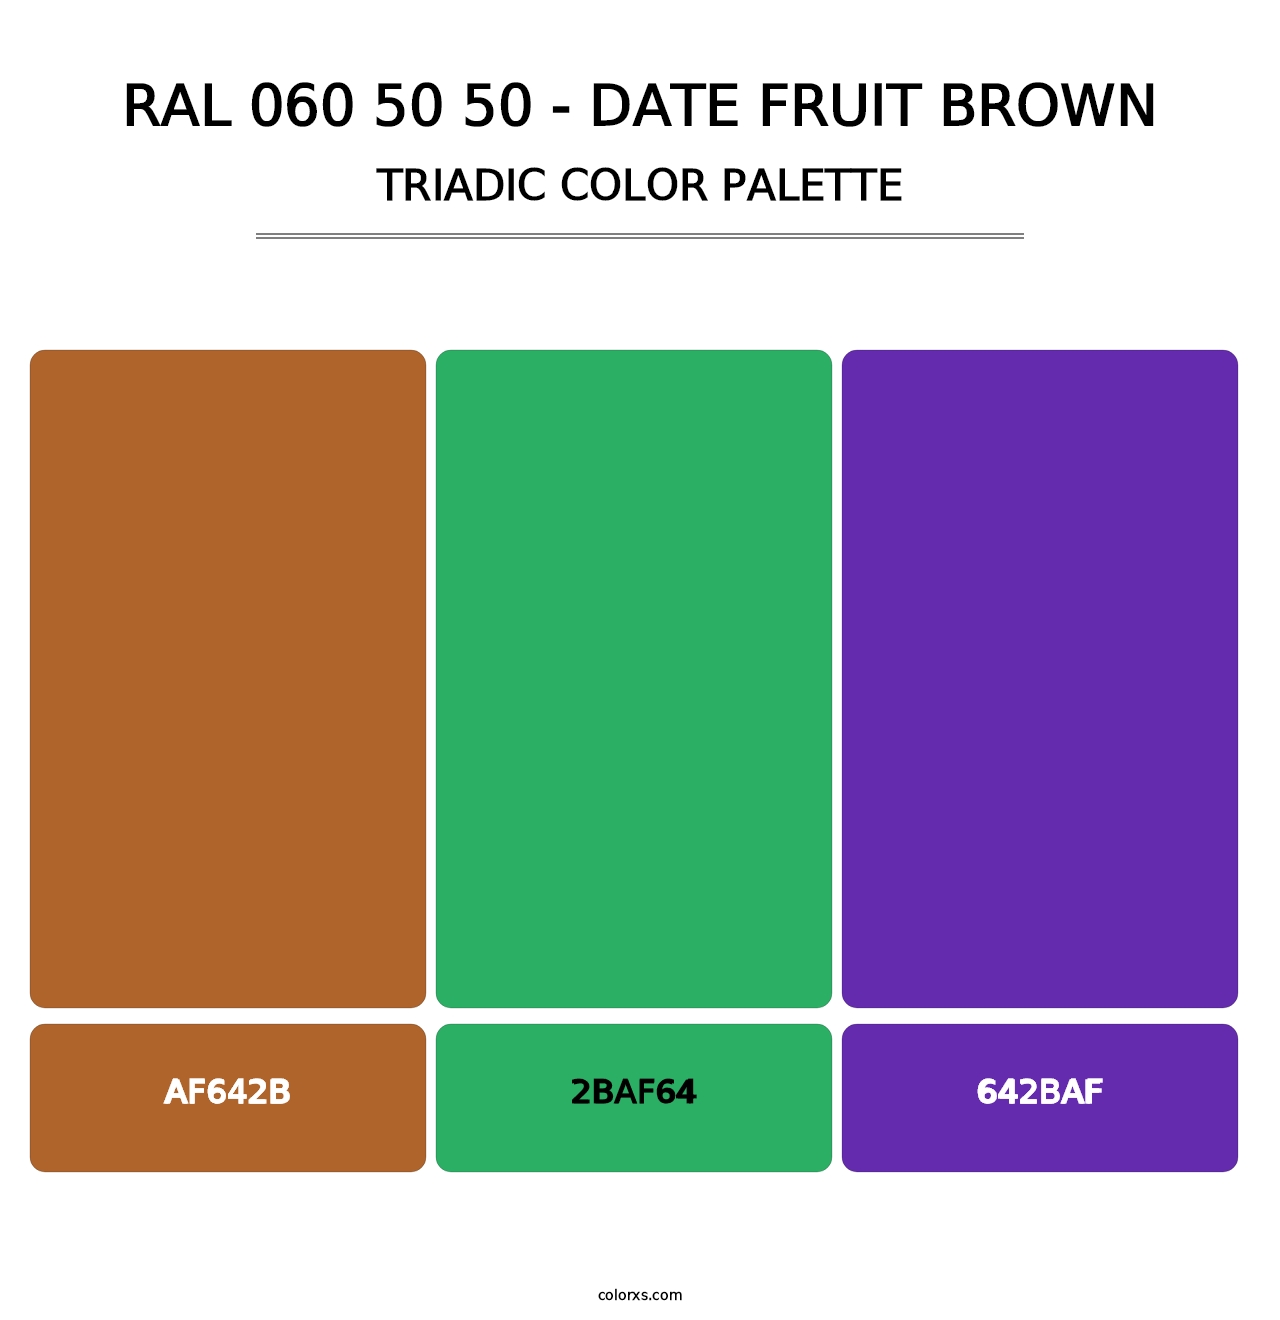 RAL 060 50 50 - Date Fruit Brown - Triadic Color Palette